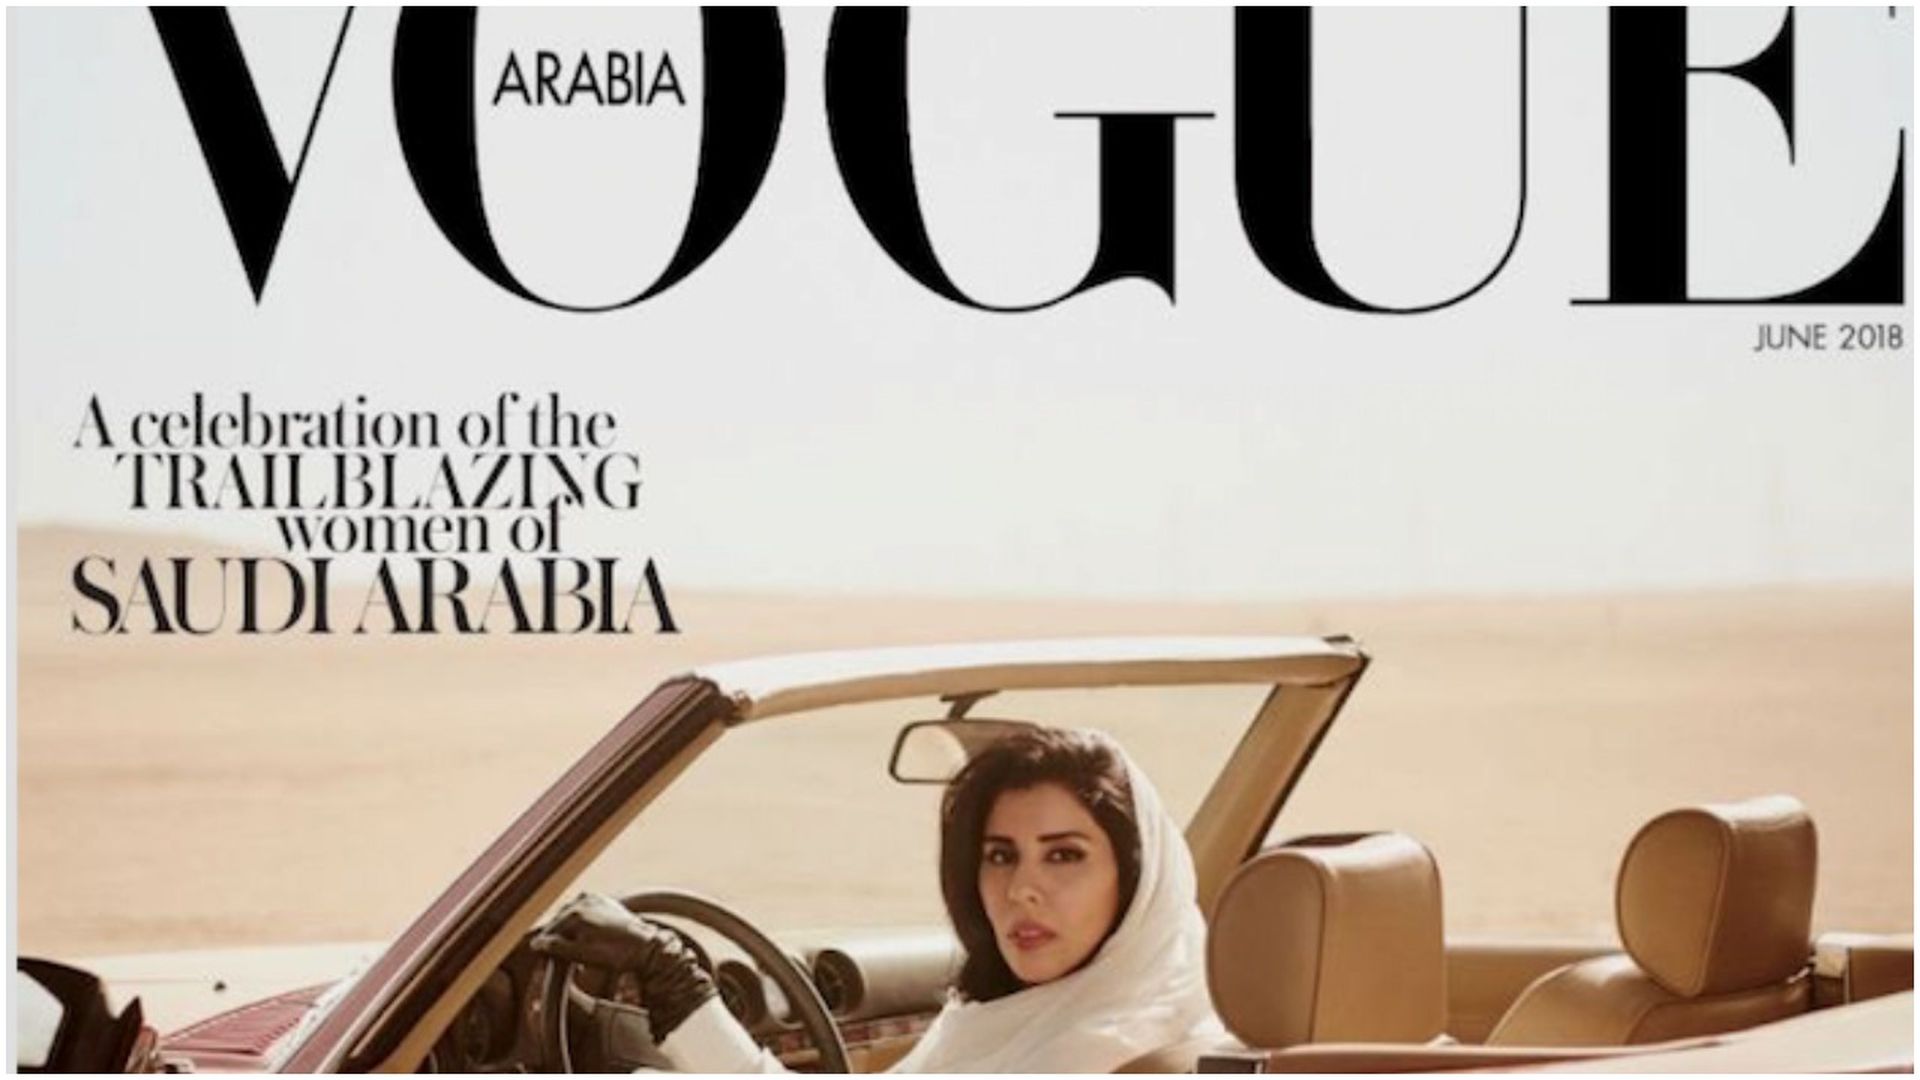  Saudi Princess Hayfa bint Abdullah al-Saud poses behind the wheel of a convertible